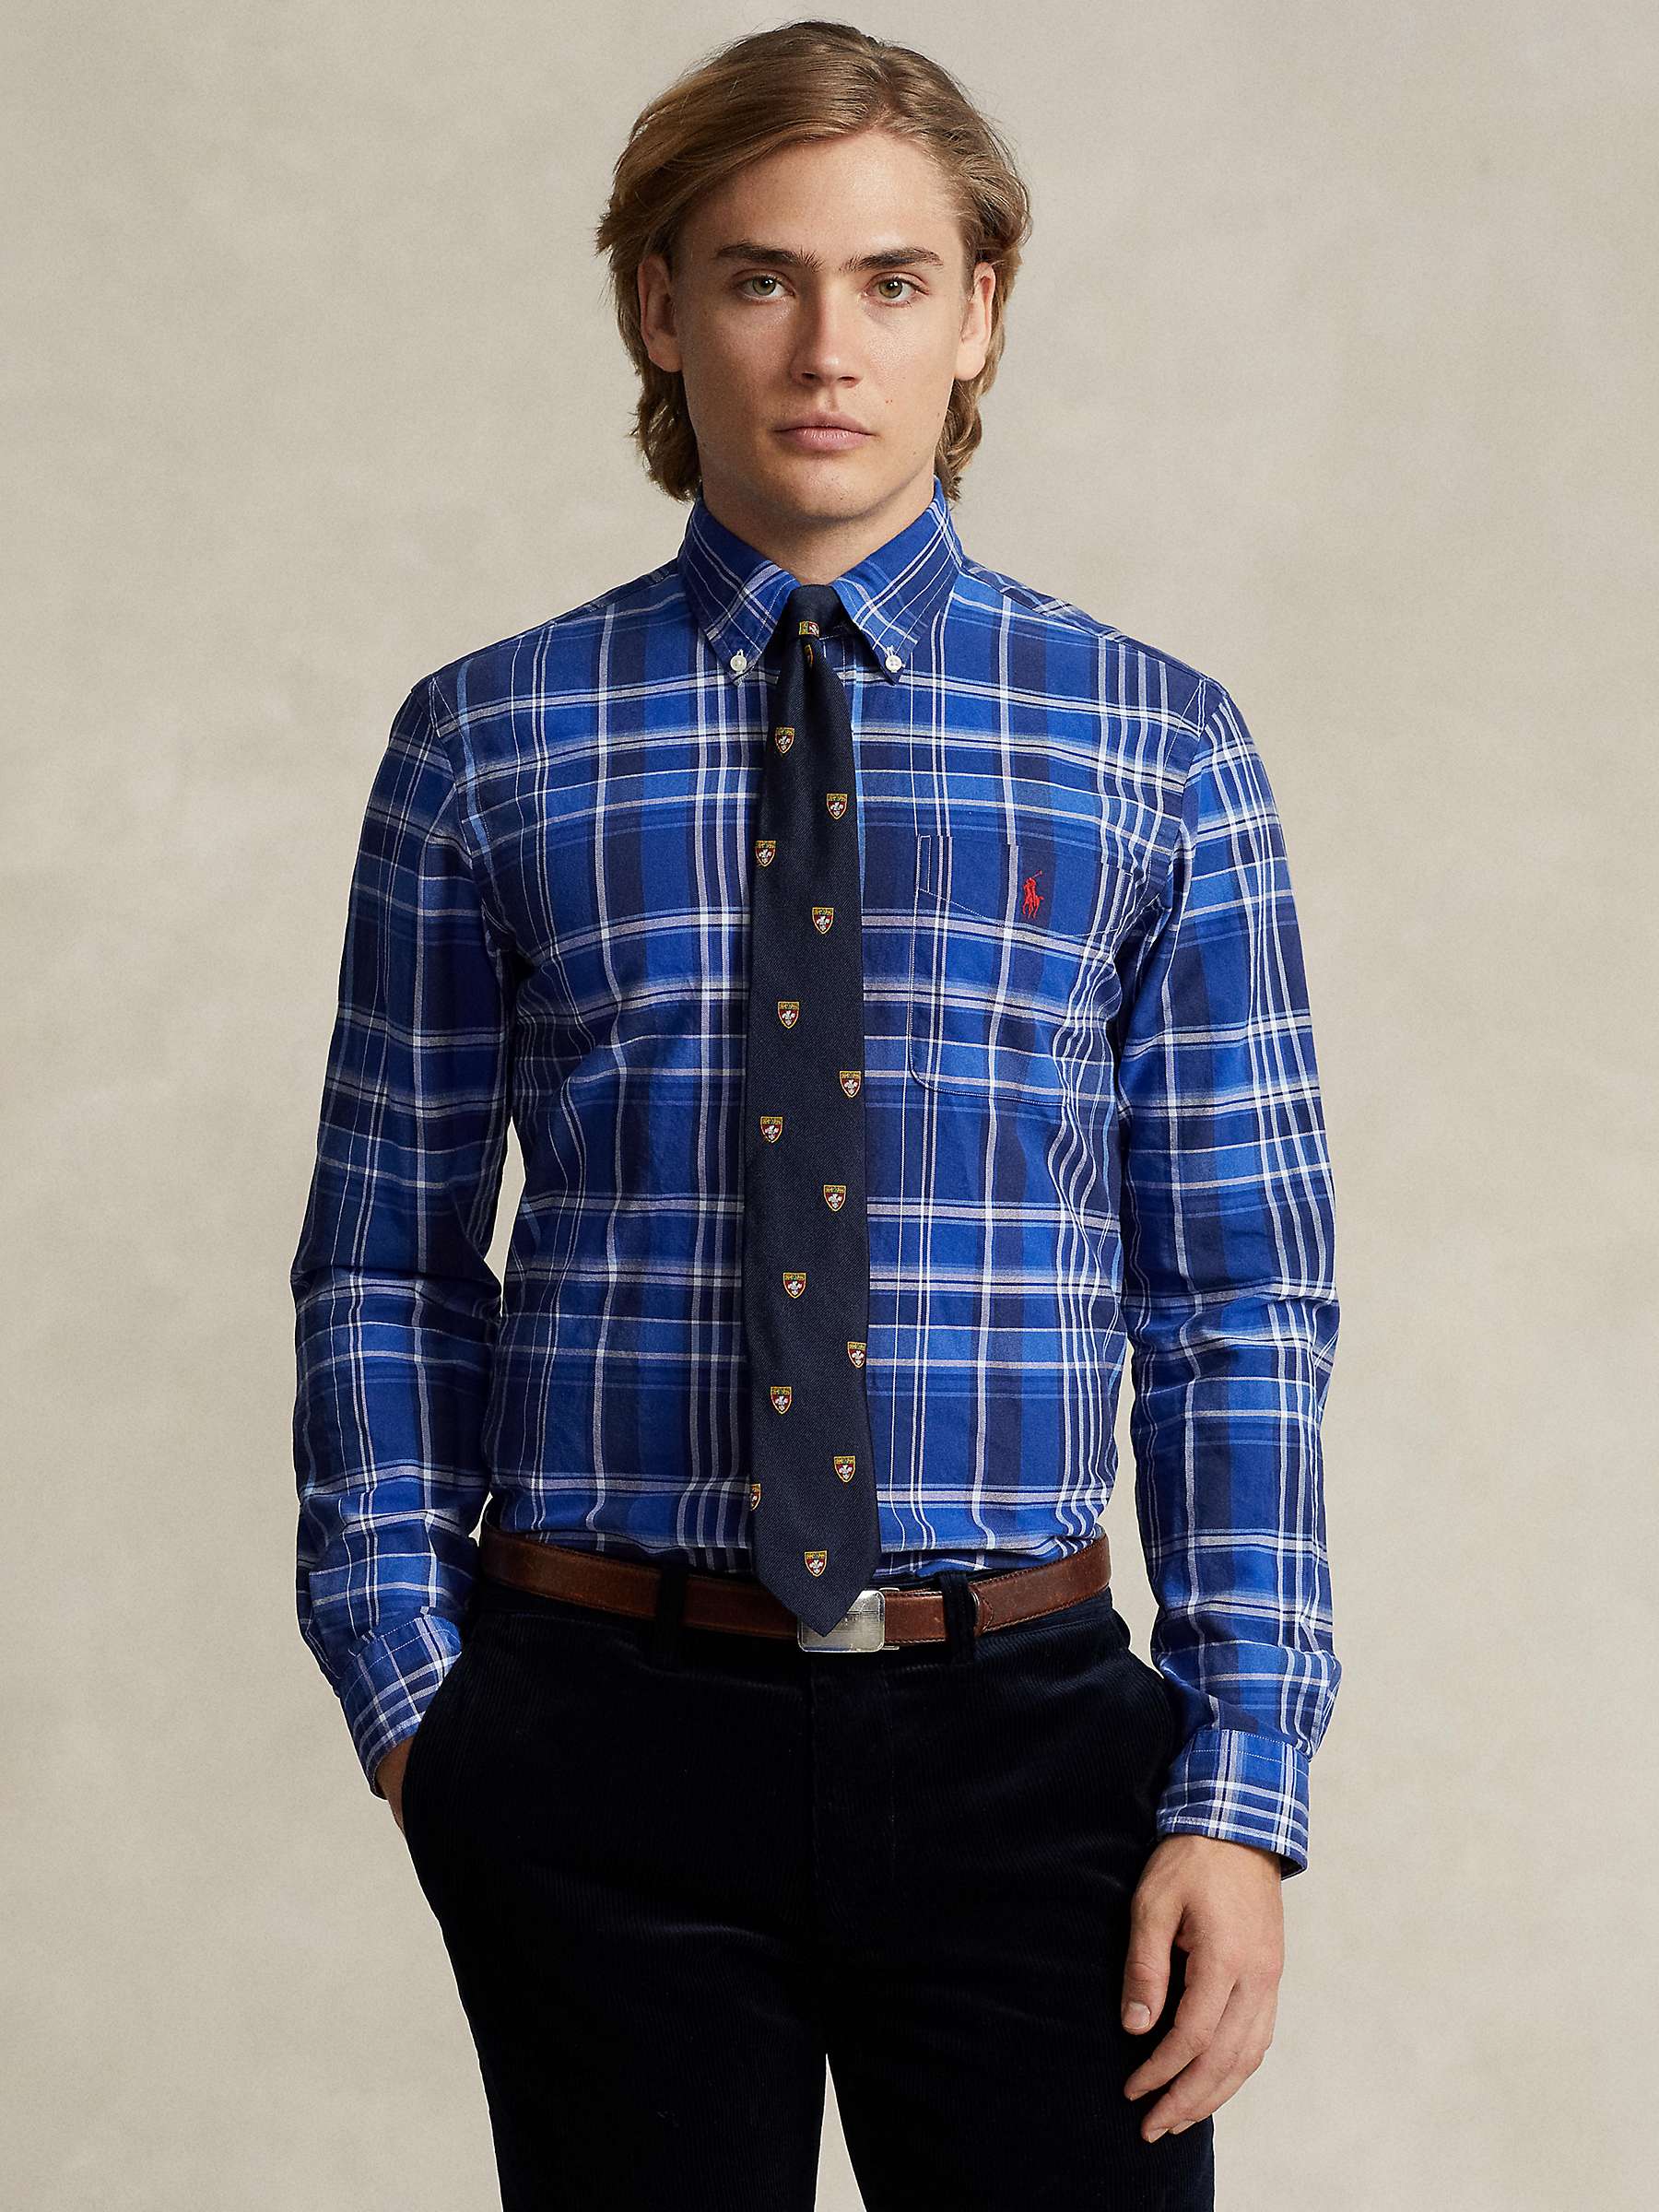 Buy Ralph Lauren Polo Ralph Lauren Check Long Sleeve Cotton Shirt, Blue/Multi Online at johnlewis.com